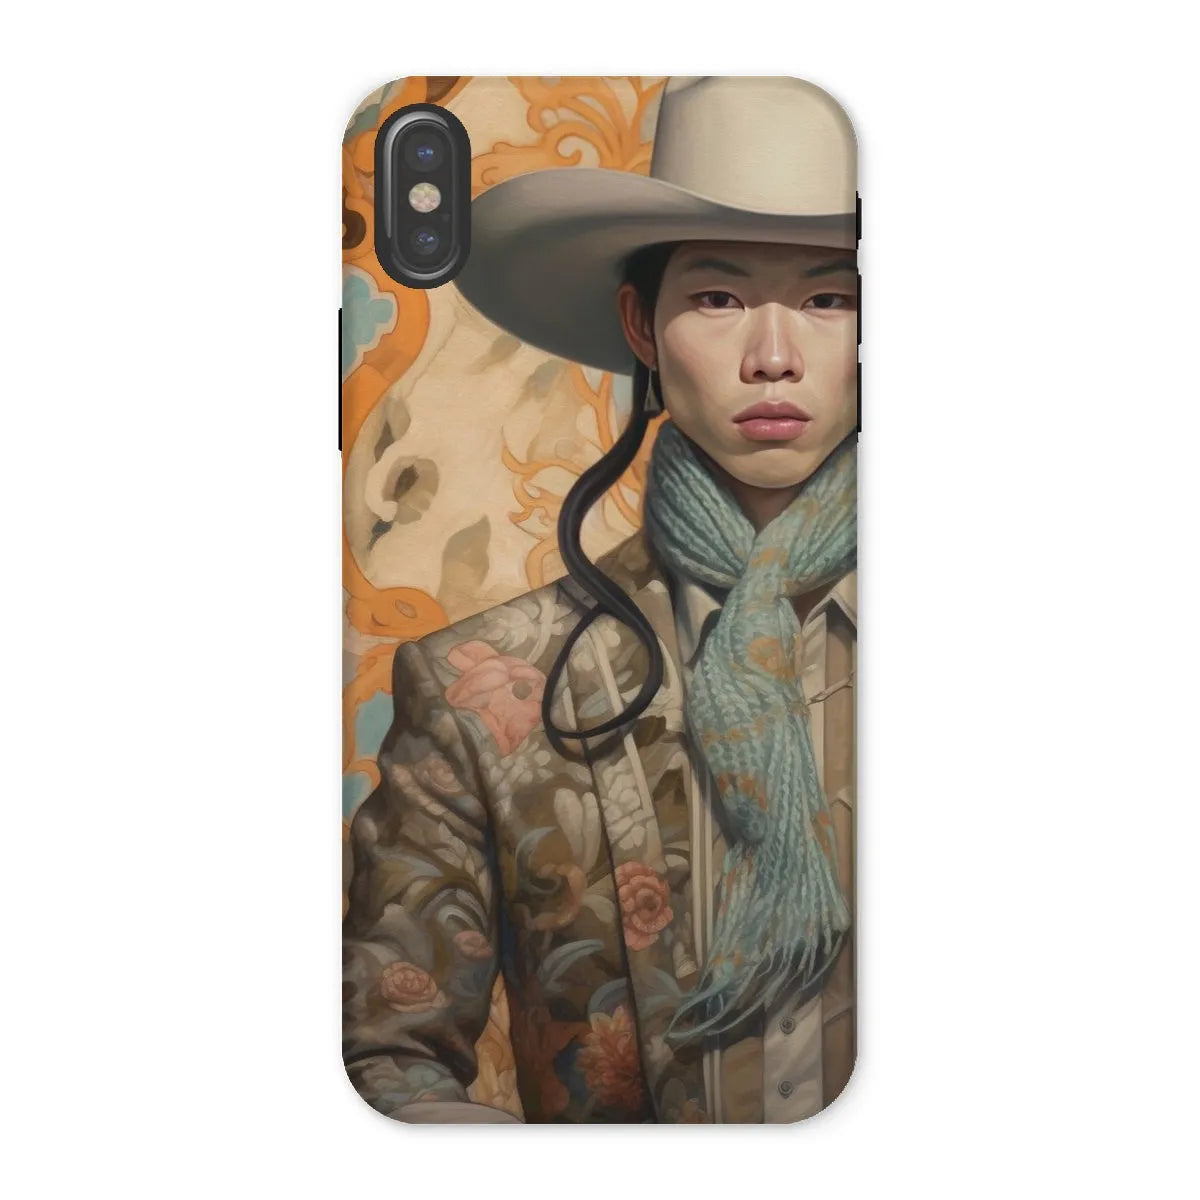 Baihu The Gay Cowboy - Gay Aesthetic Art Phone Case - Iphone x / Matte - Mobile Phone Cases - Aesthetic Art